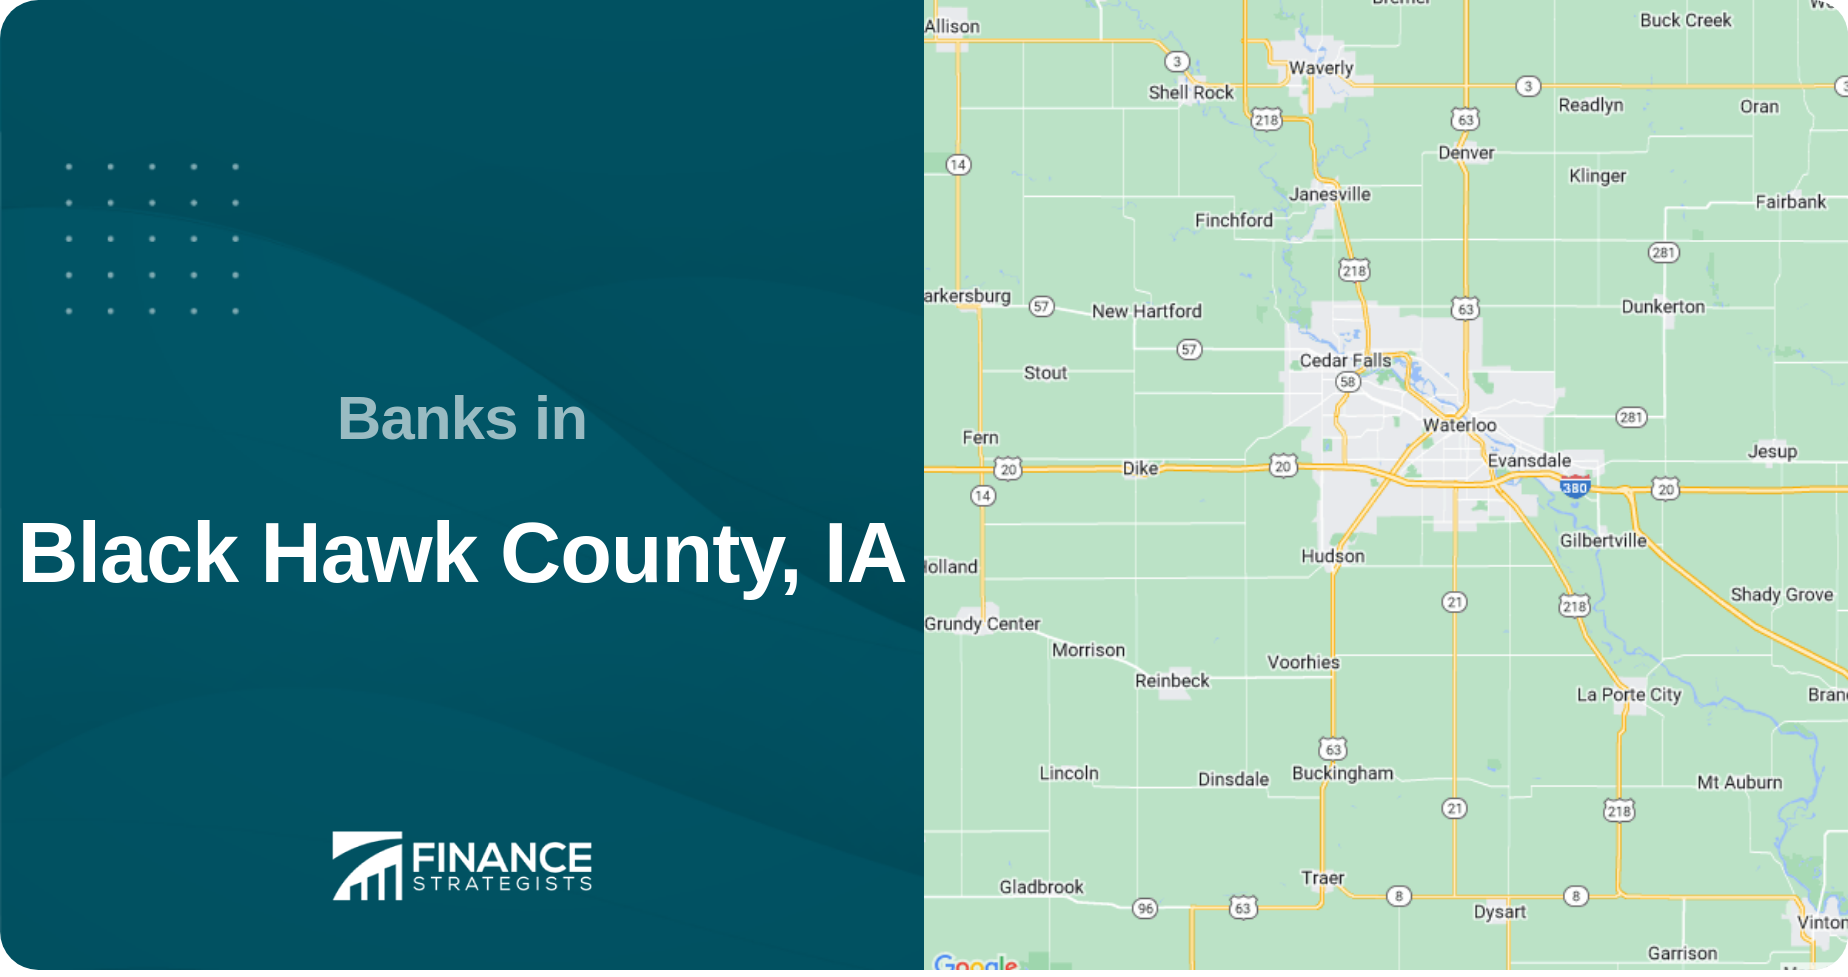 Banks in Black Hawk County, IA